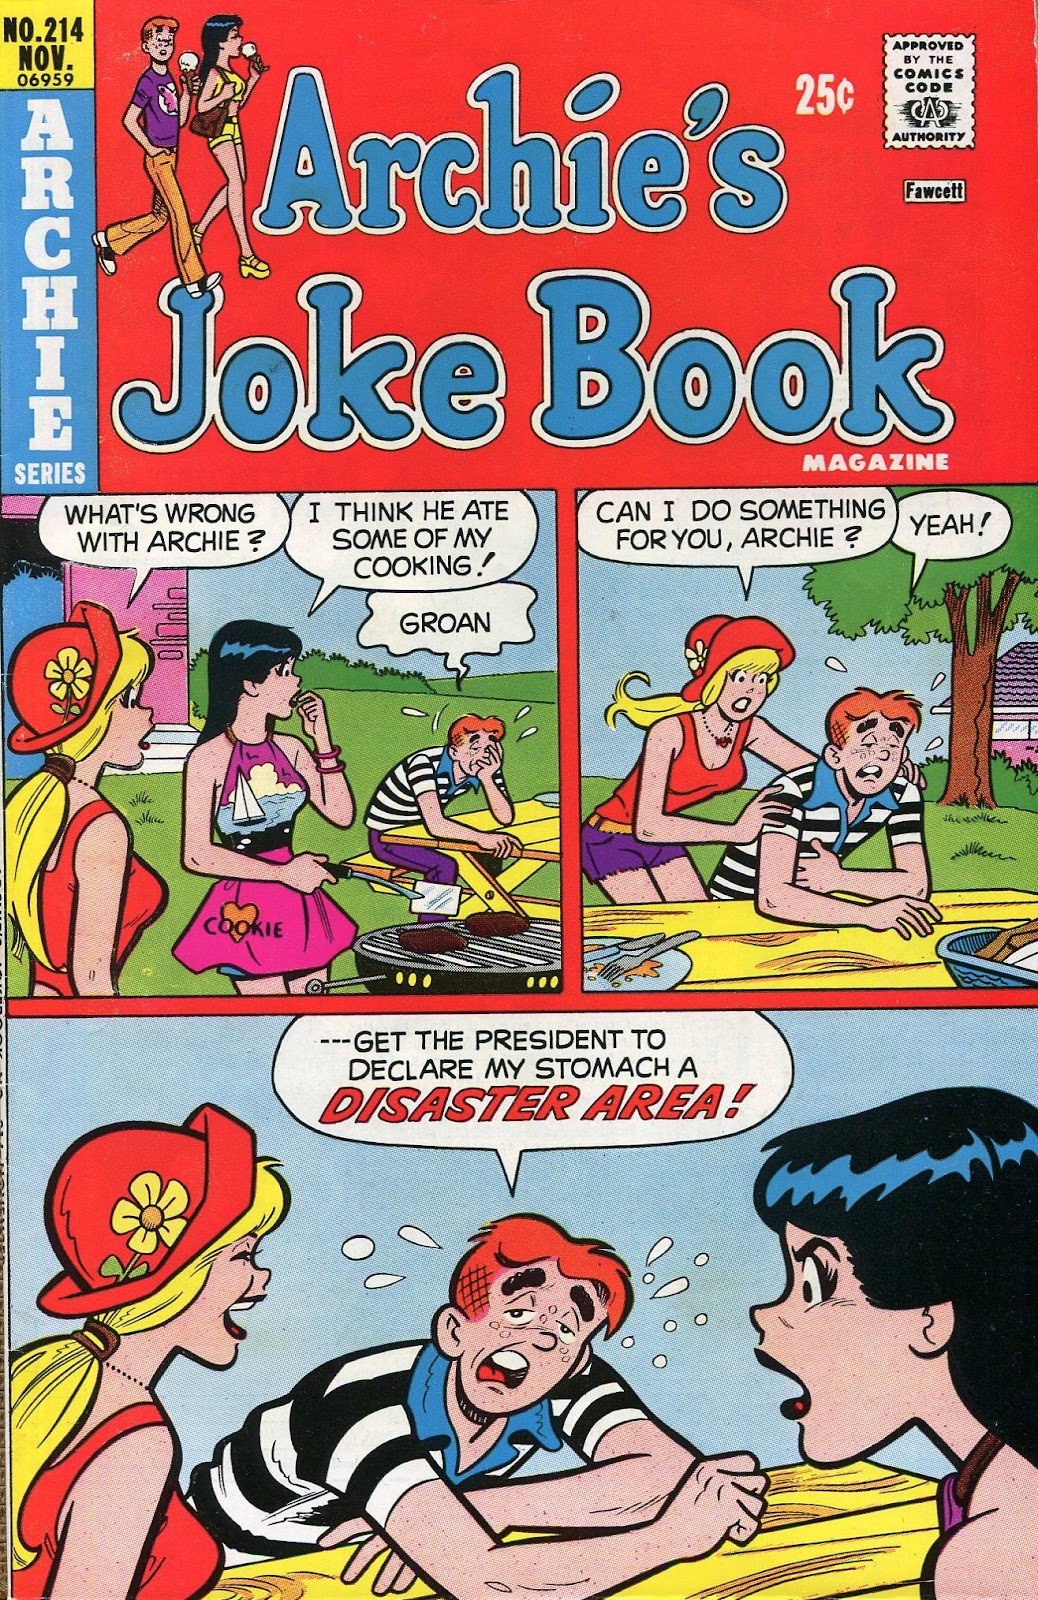 Archie's Joke Book Magazine issue 214 - Page 1